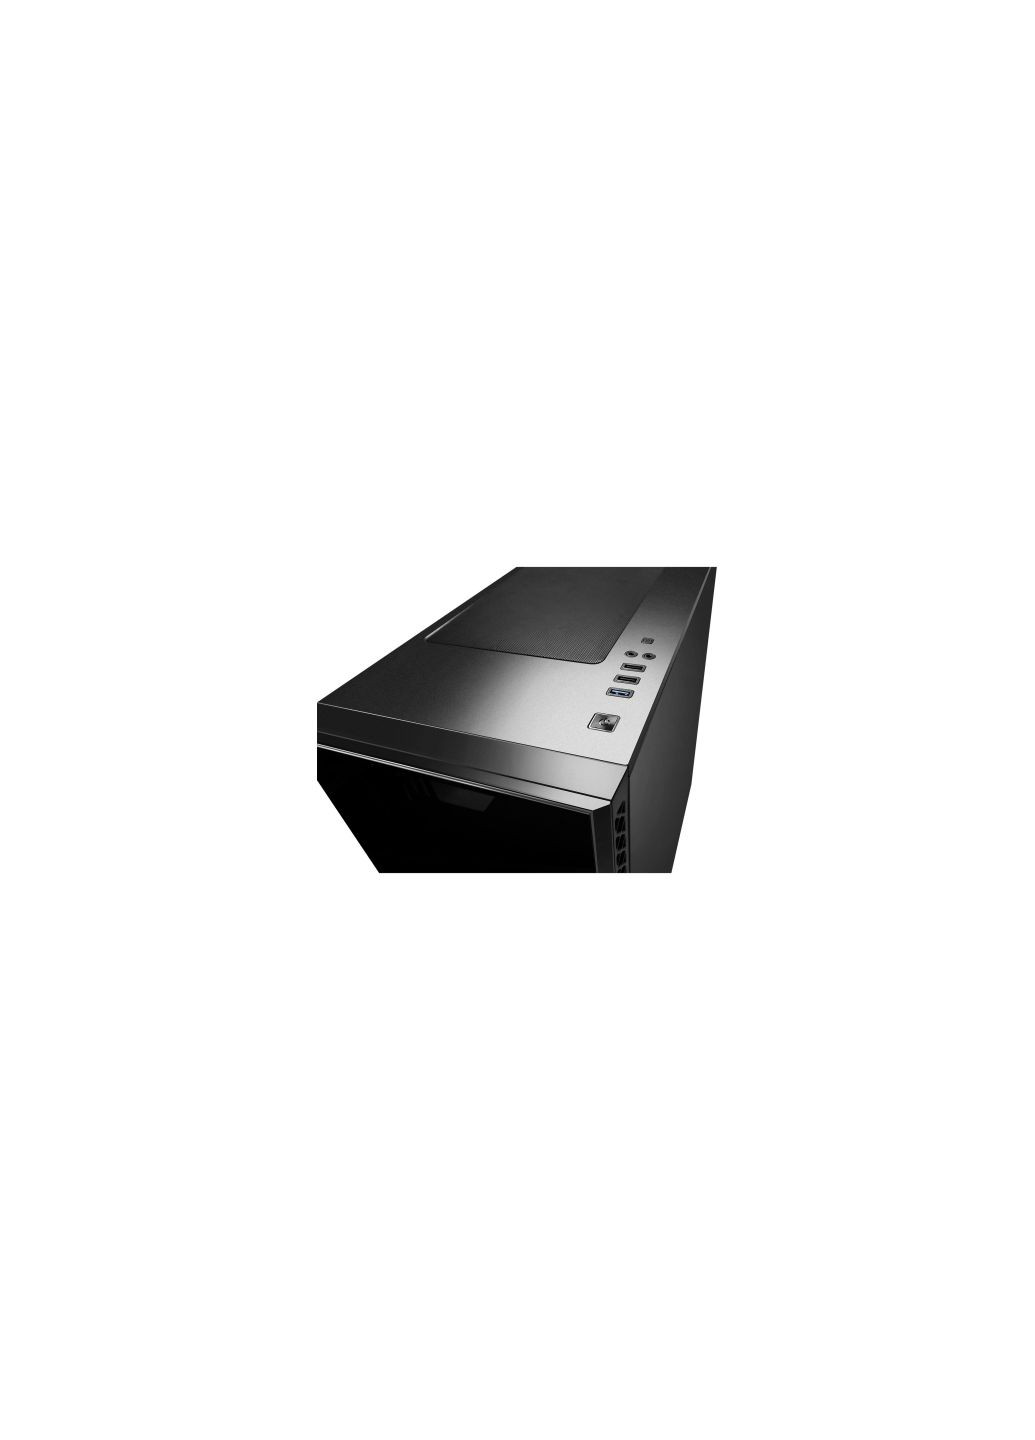 Корпус Matrexx 50 ADDRGB 4F Black (DP-ATX-MATREXX50-AR-4F-NE) DeepCool matrexx 50 add-rgb 4f black (275099162)